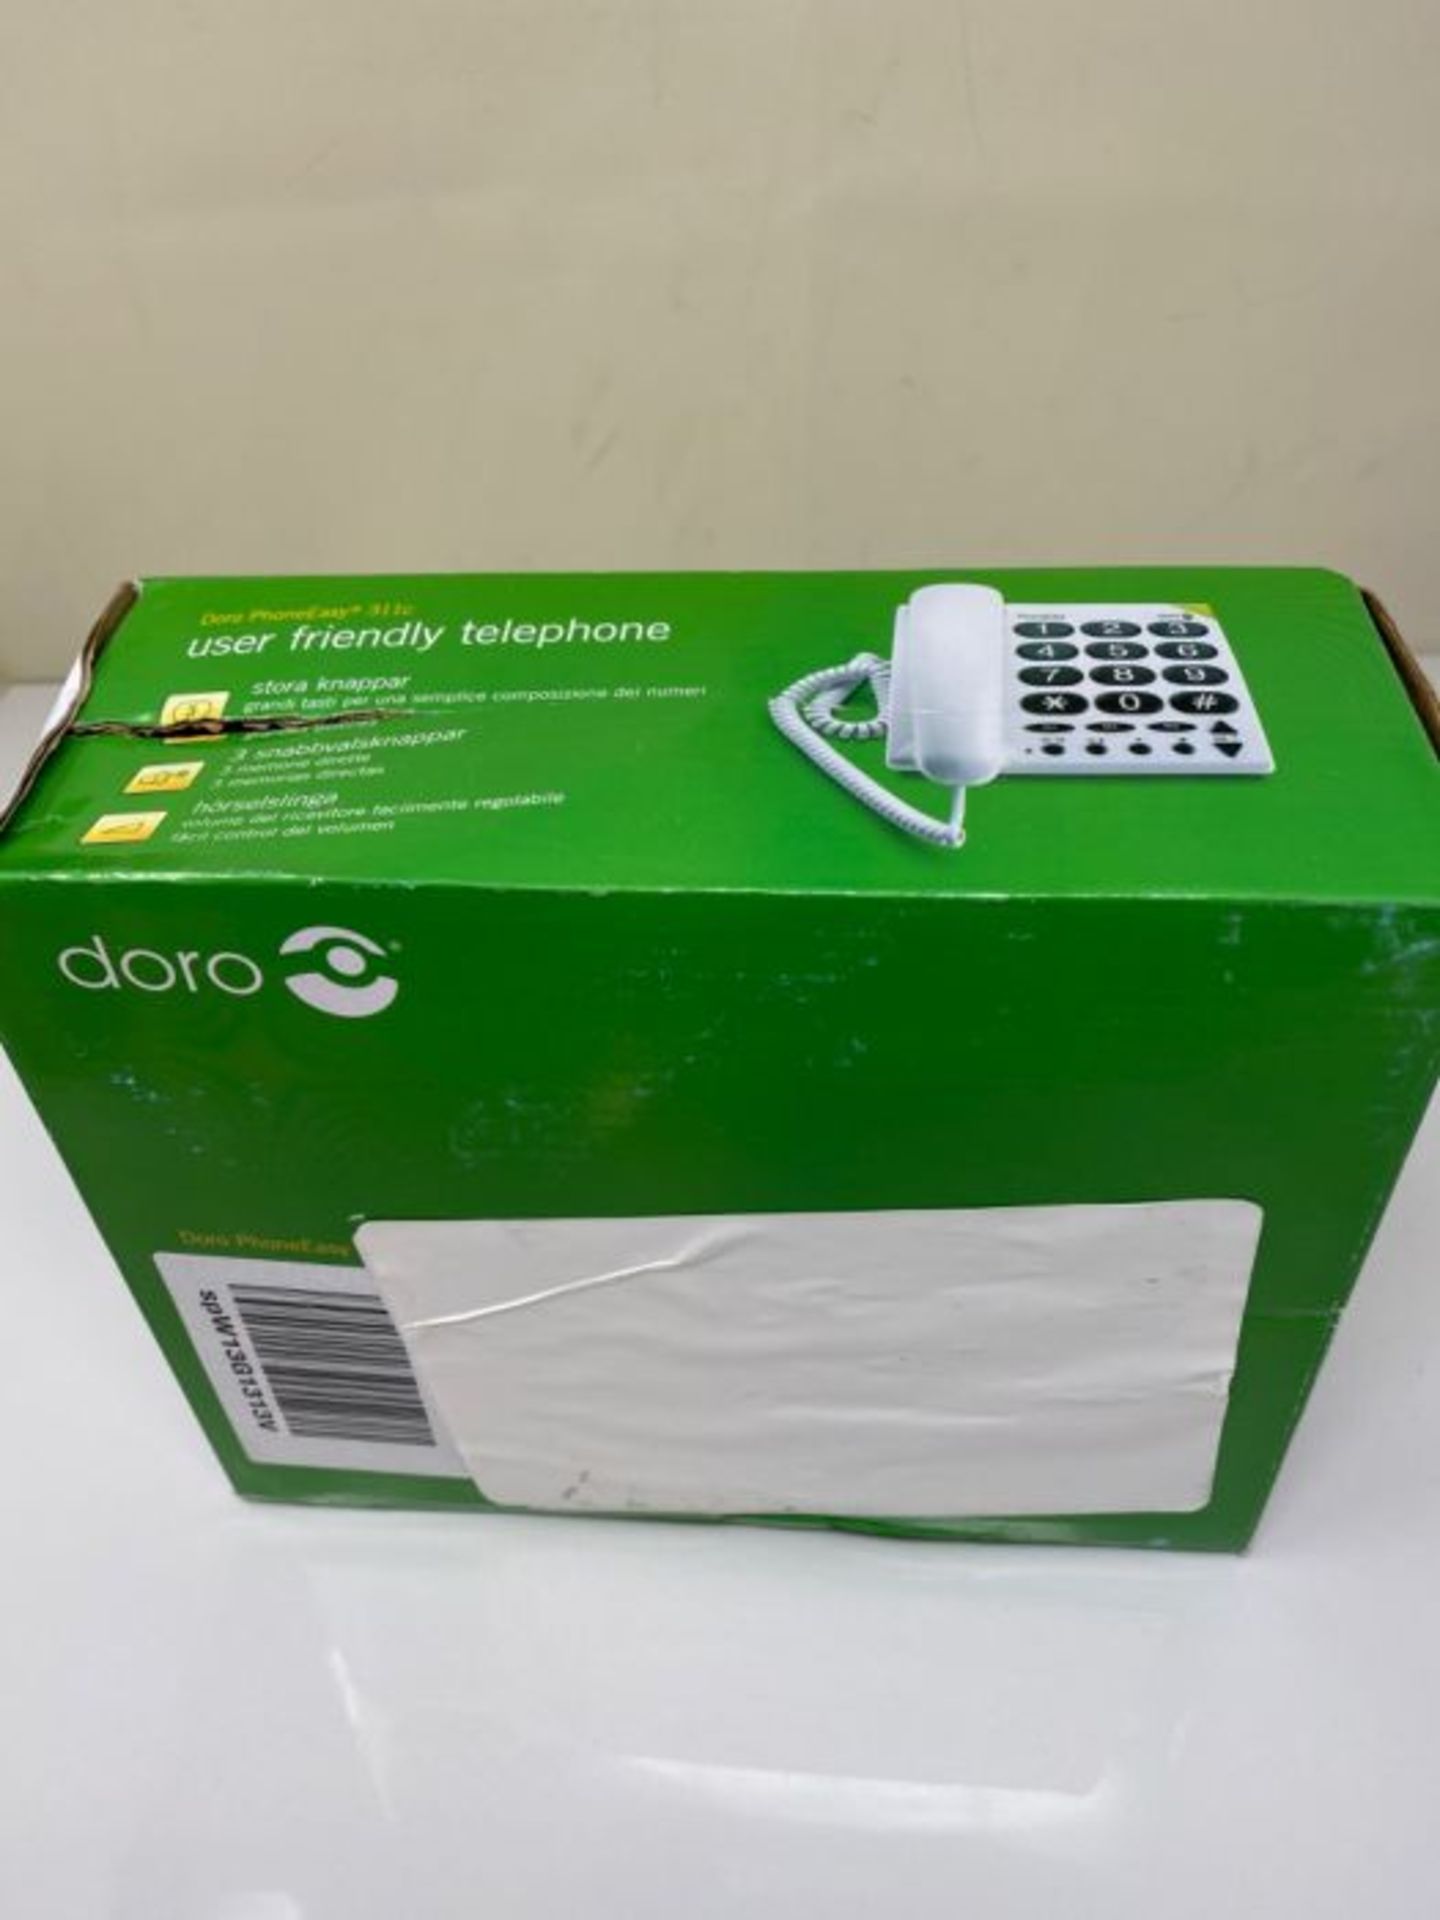 Doro PhoneEasy 311c Big Button Corded Telephone for Seniors (White) - Image 2 of 3